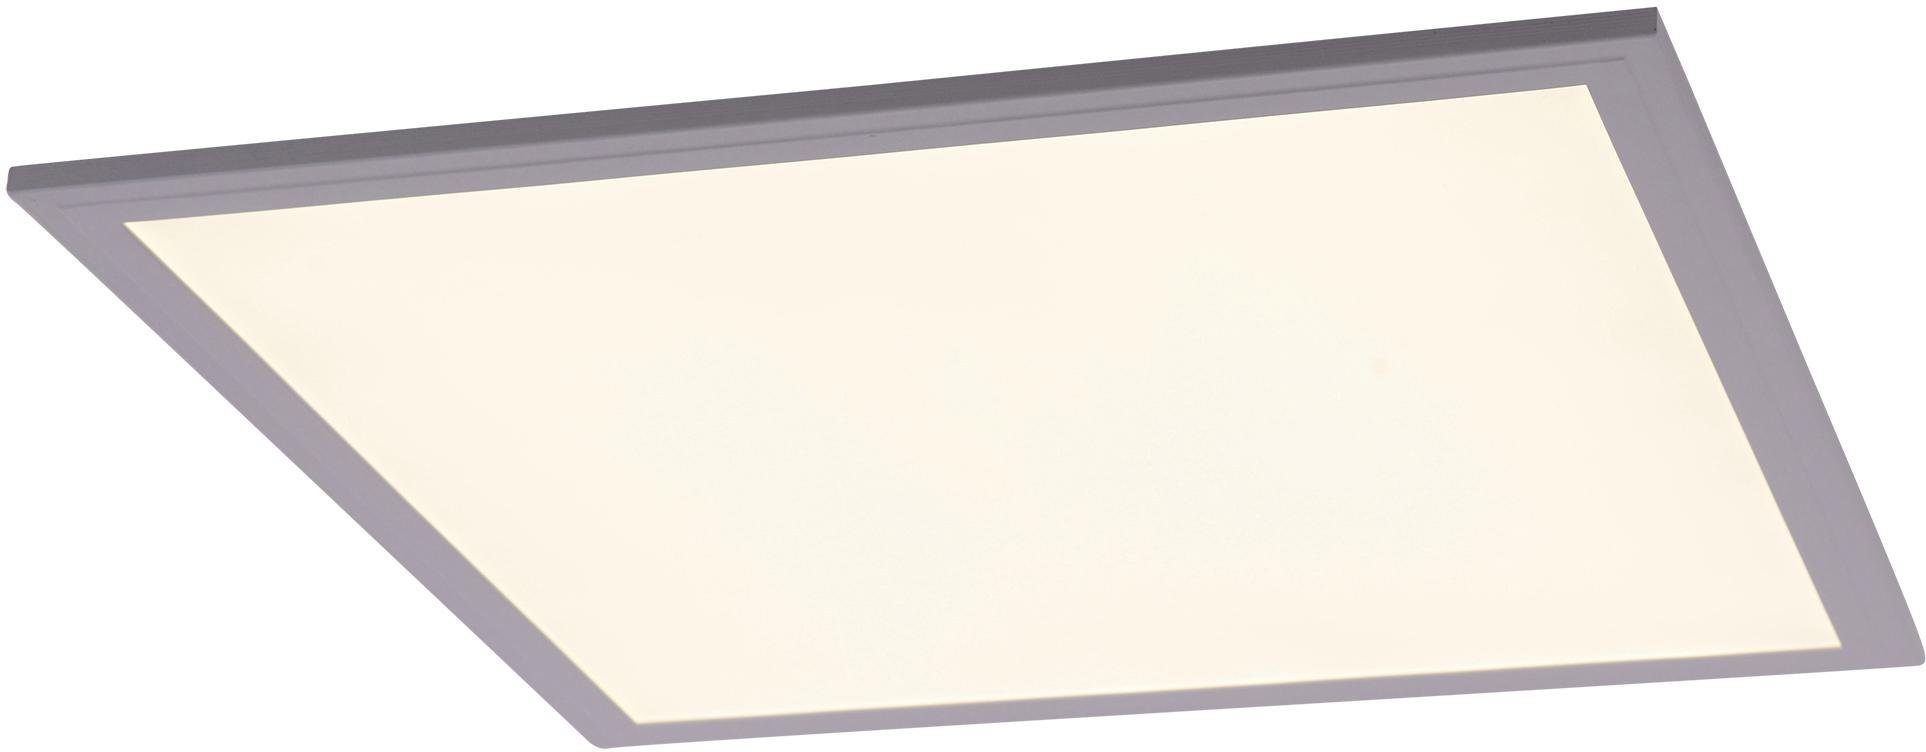 näve LED Panel PANEL, LED F, Neutralweiß, fest weiß LED integriert, Energieeffizienz: Aufbaupanel, Treiber, incl